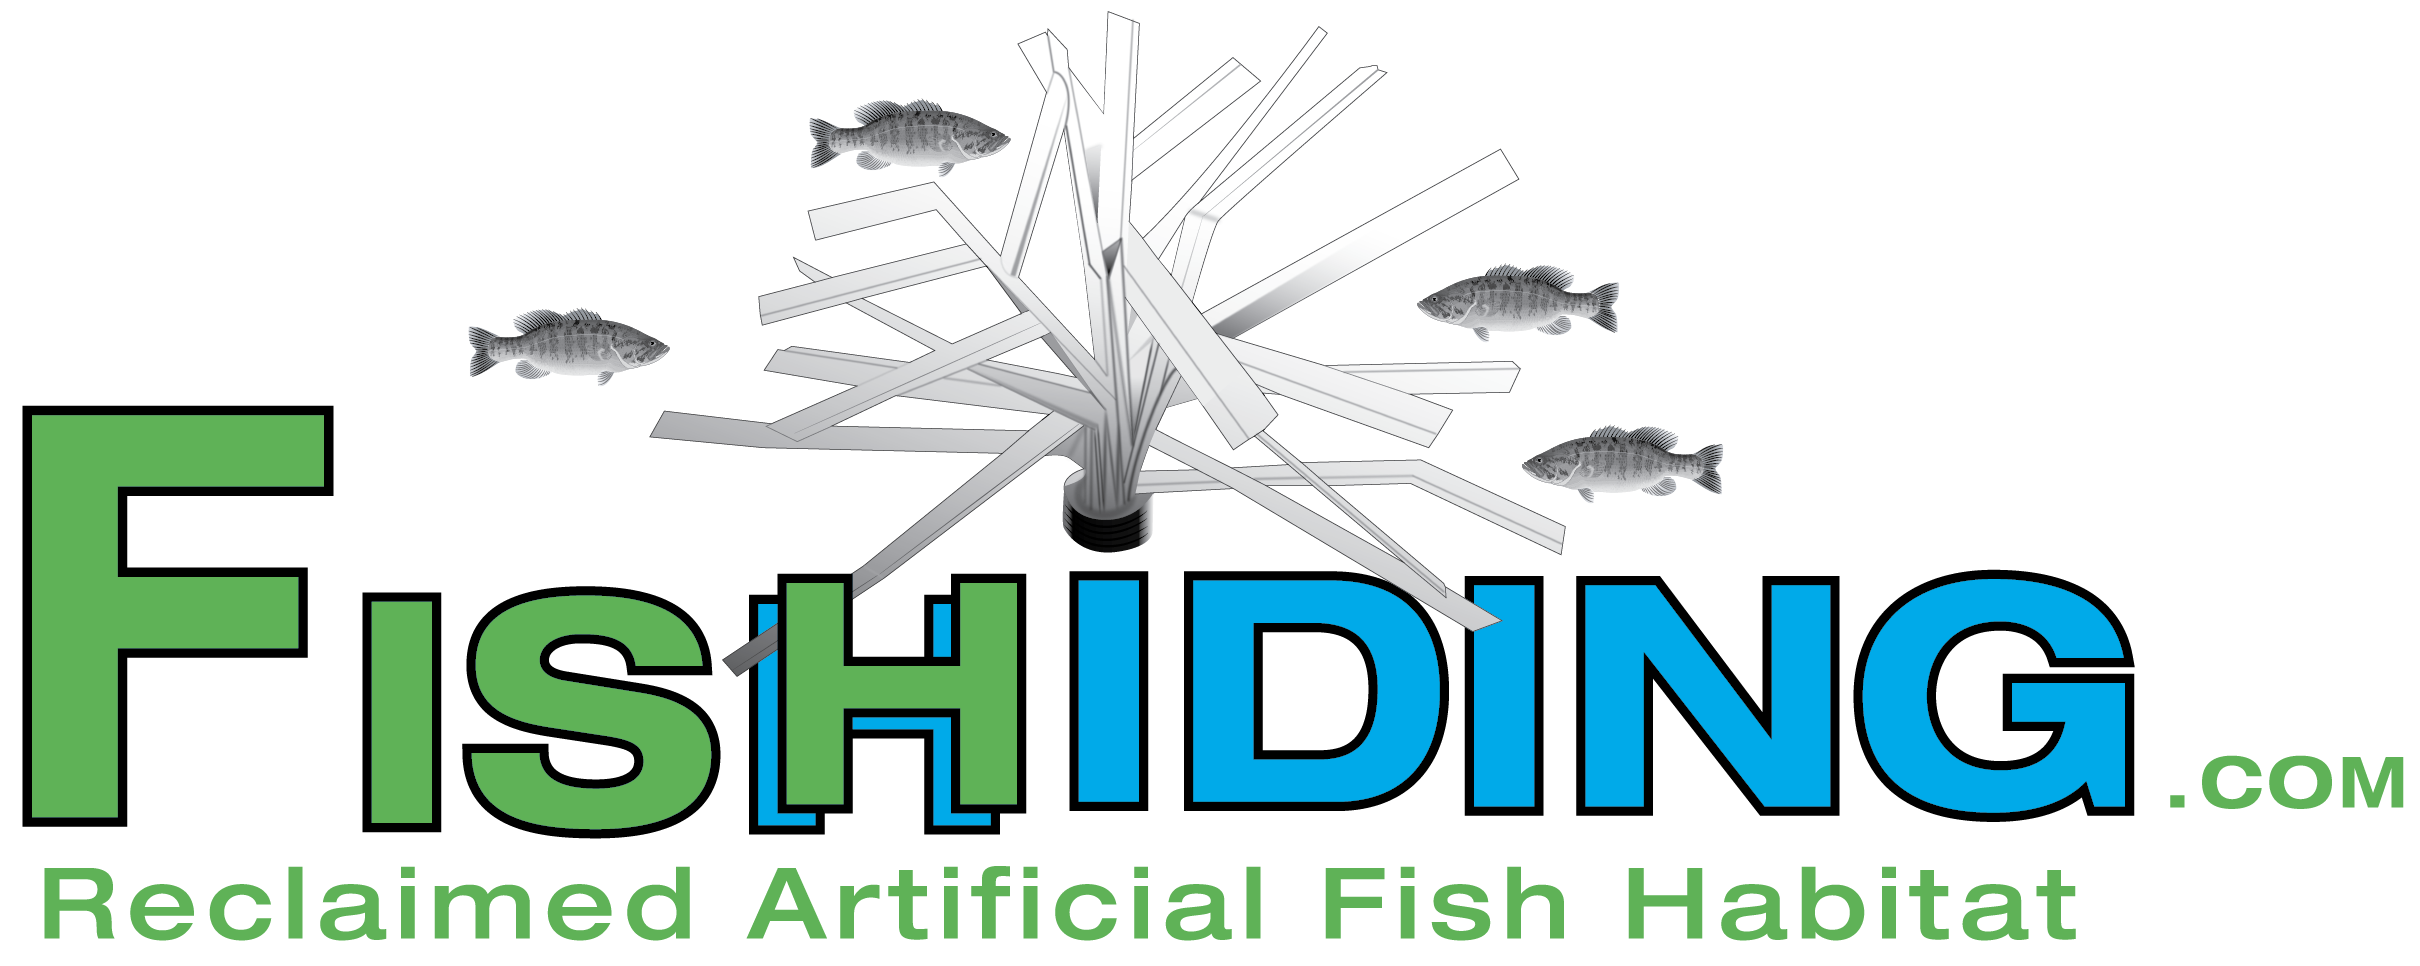 Fish Hiding Structures - Fishiding Reclaimed Artificial Fish Habitat